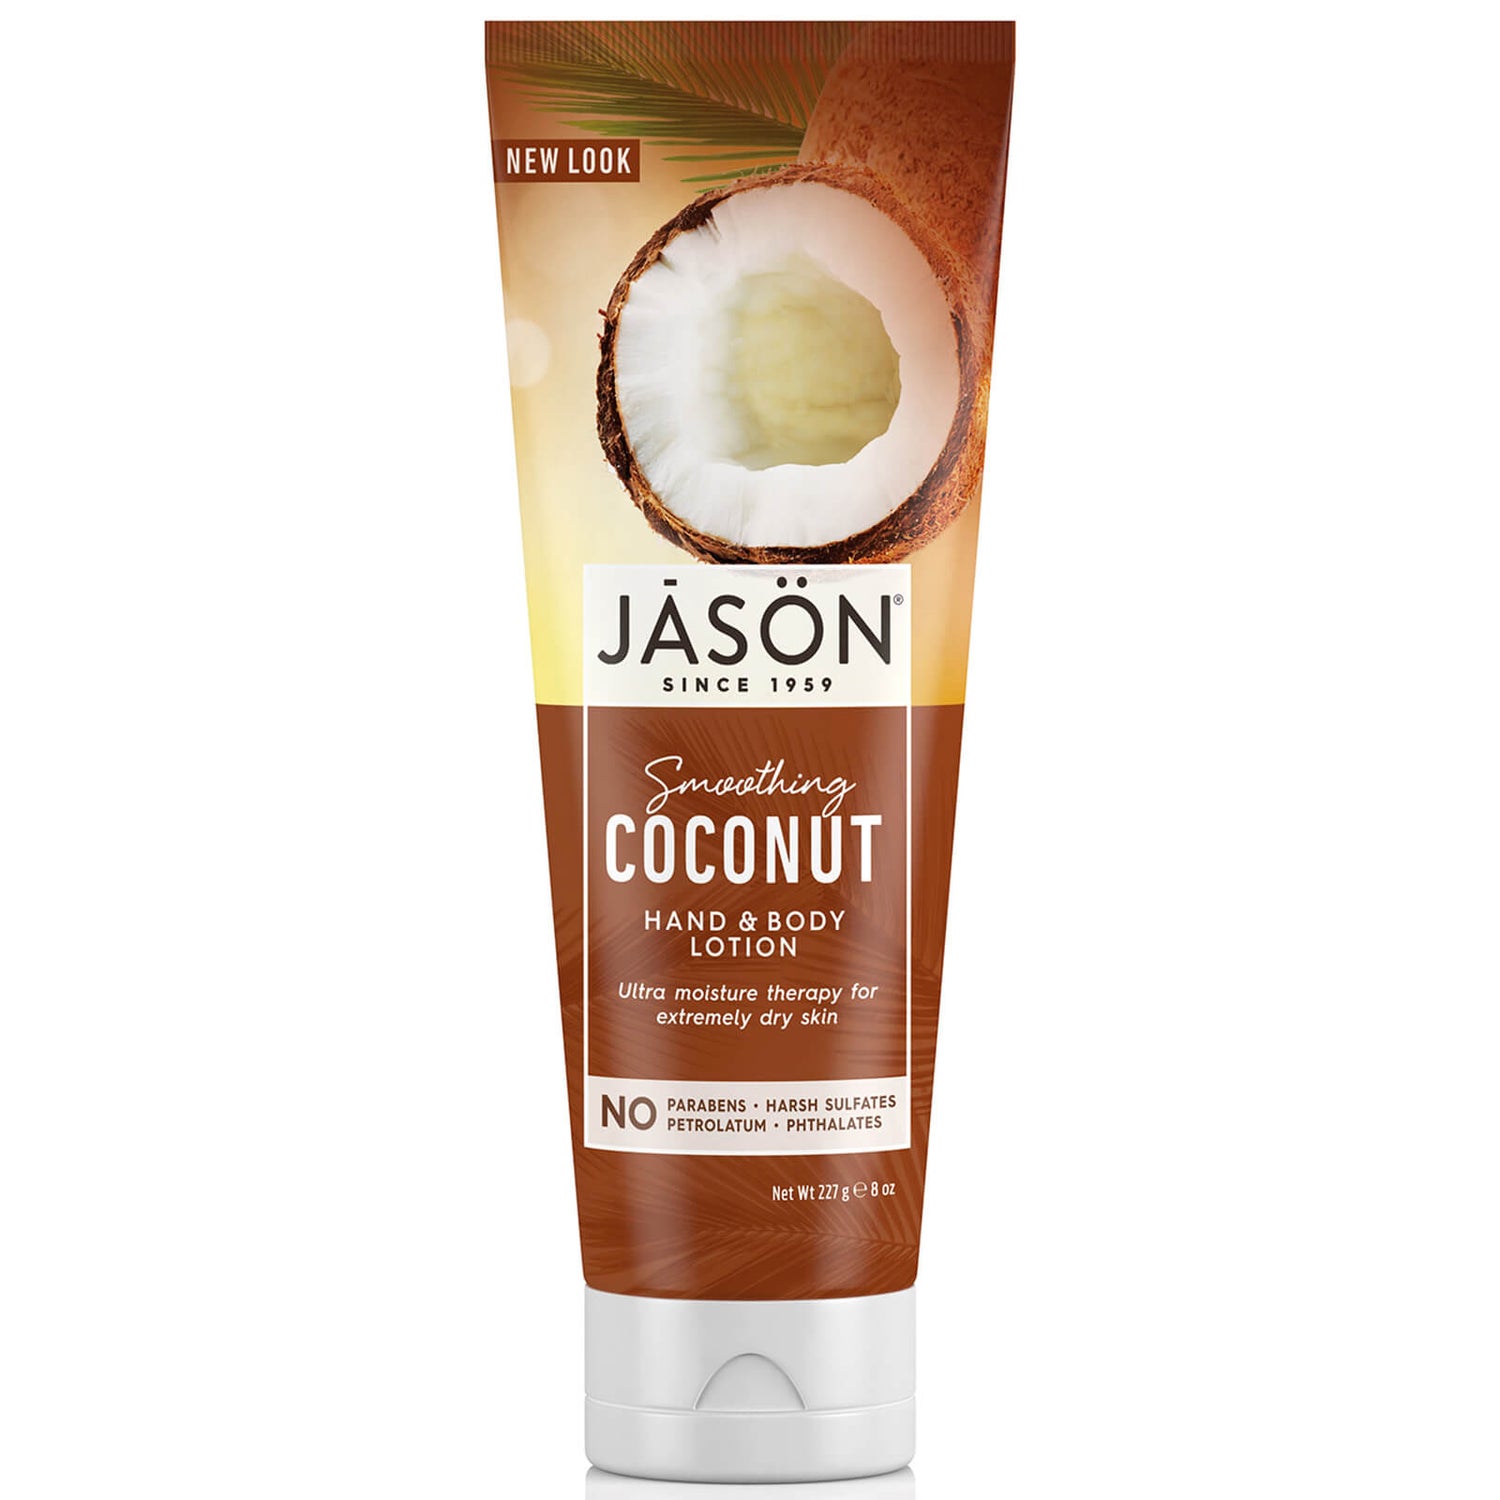 JASON Smoothing Coconut Hand & corpo lozione 227g